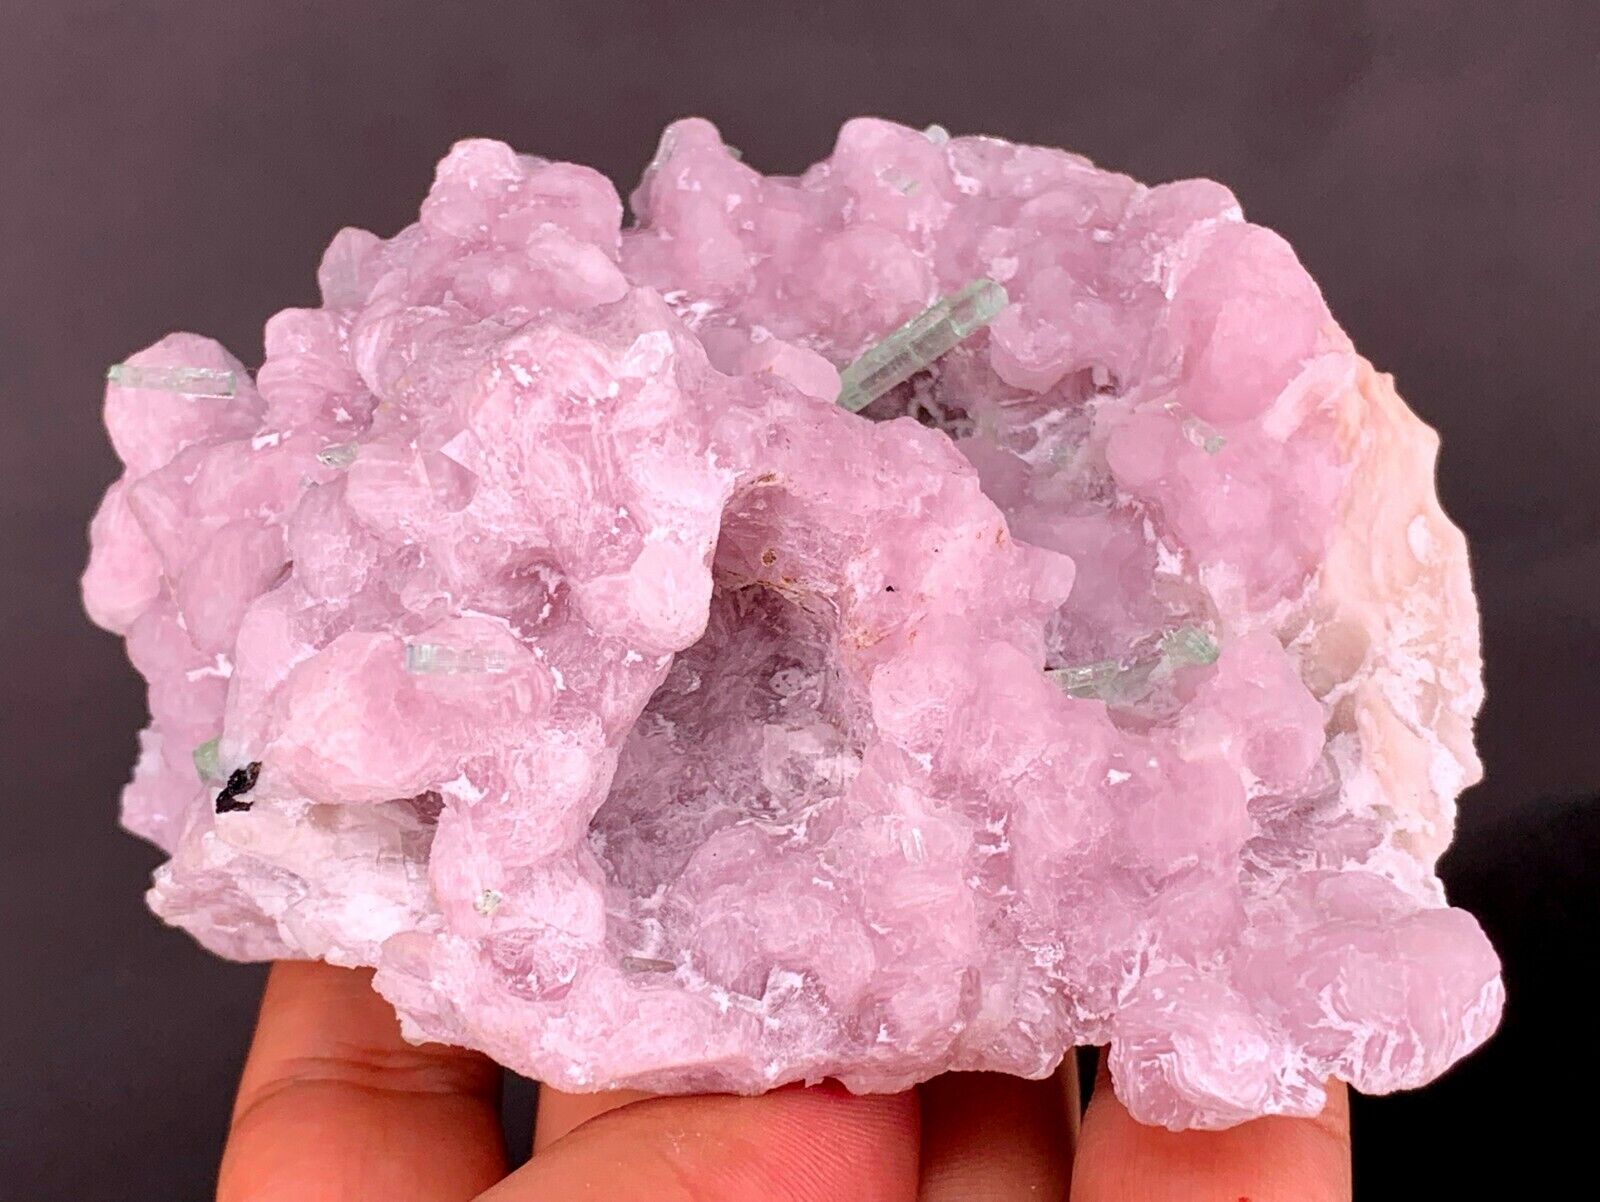 Aesthetic Seafoam TOURMALINE Crystal On Pink LEPIDOLITE Flower From Pakistan